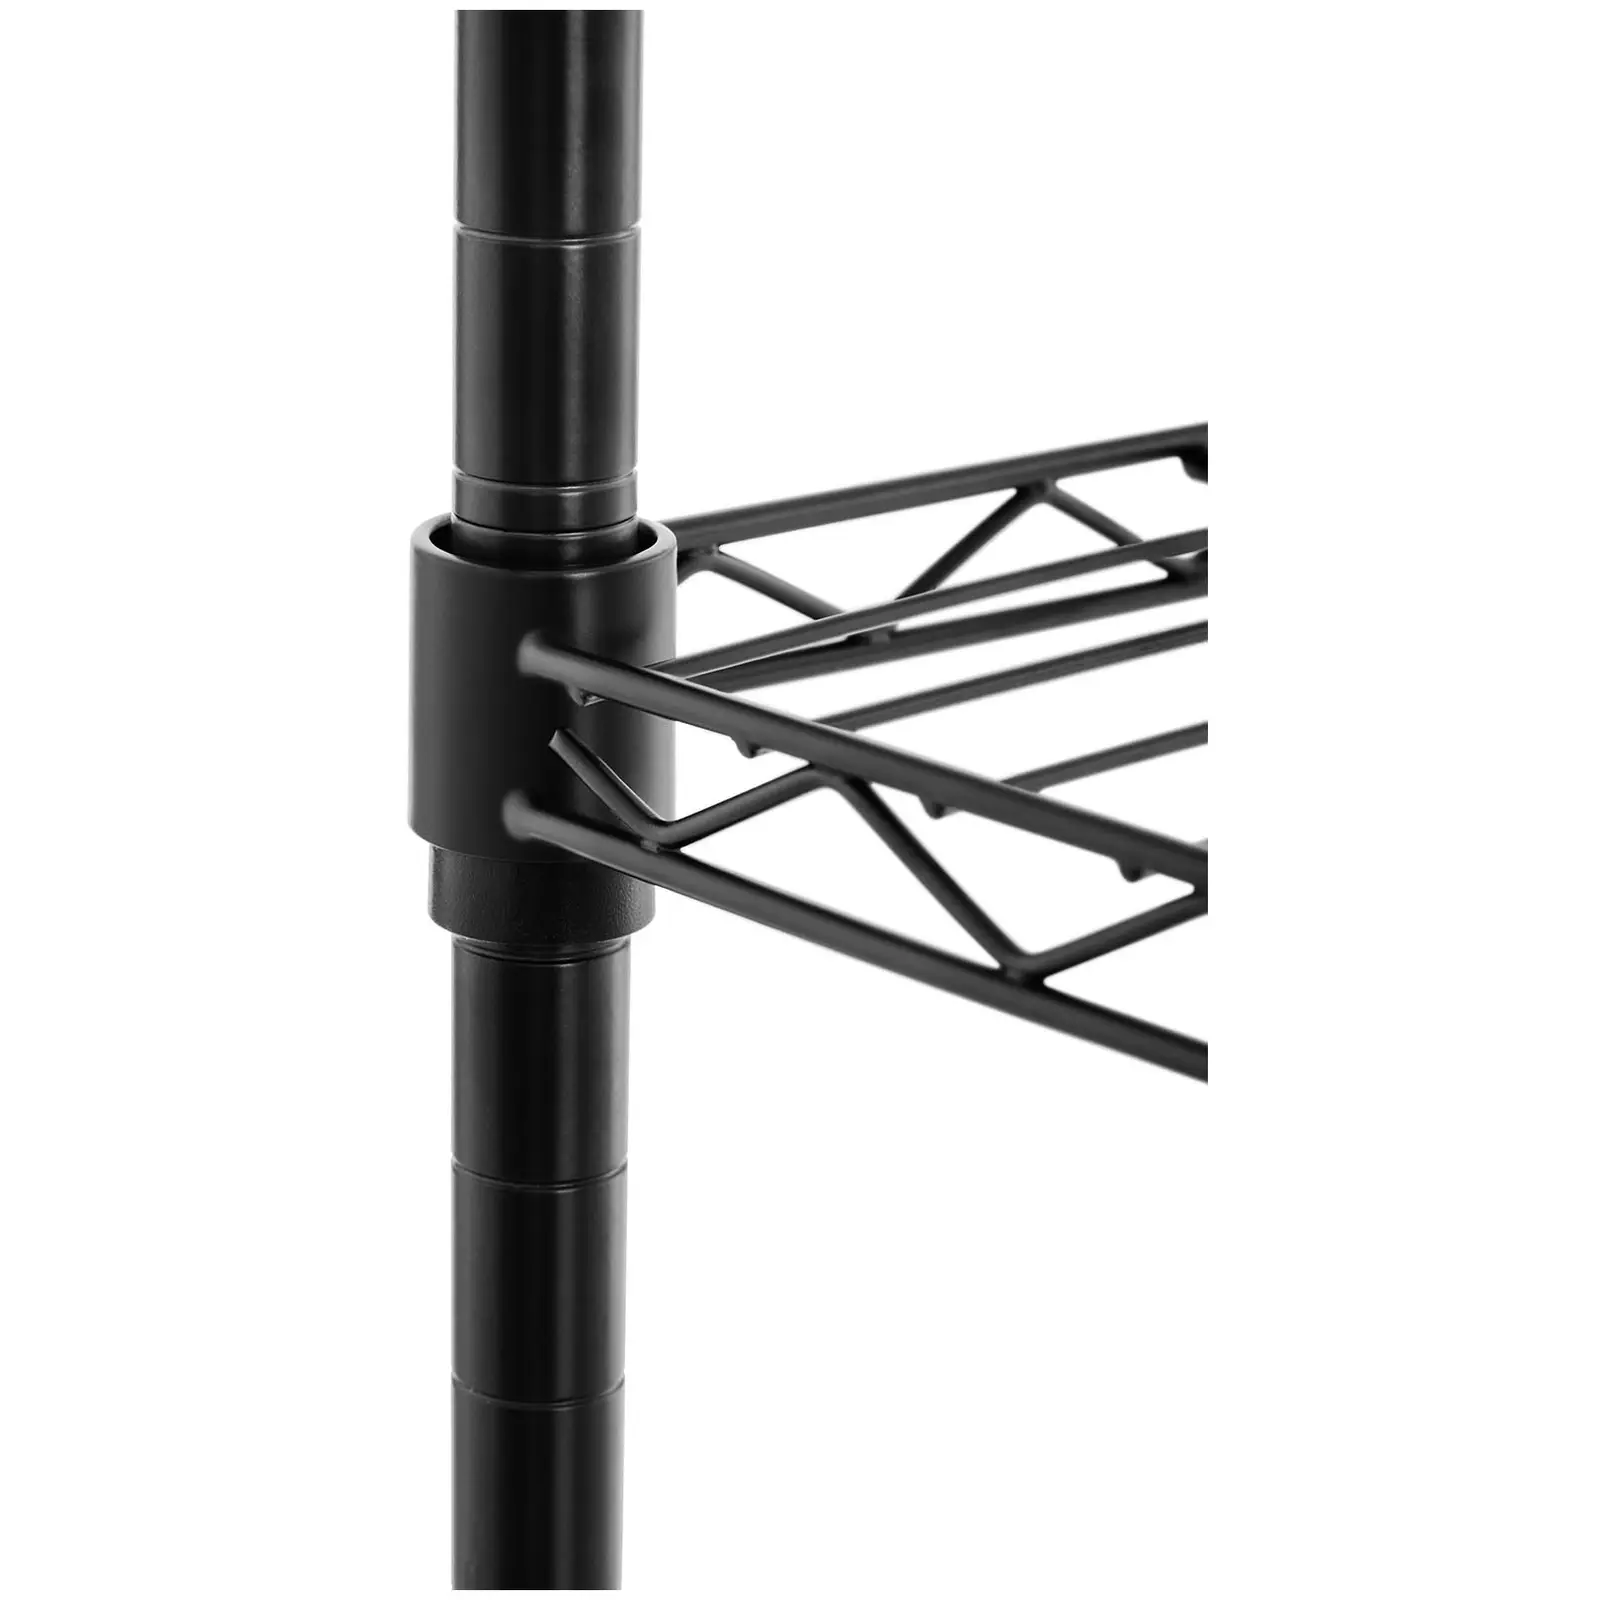 Metal Storage Rack - 55 x 45 x 149.5 cm - 150 kg - black